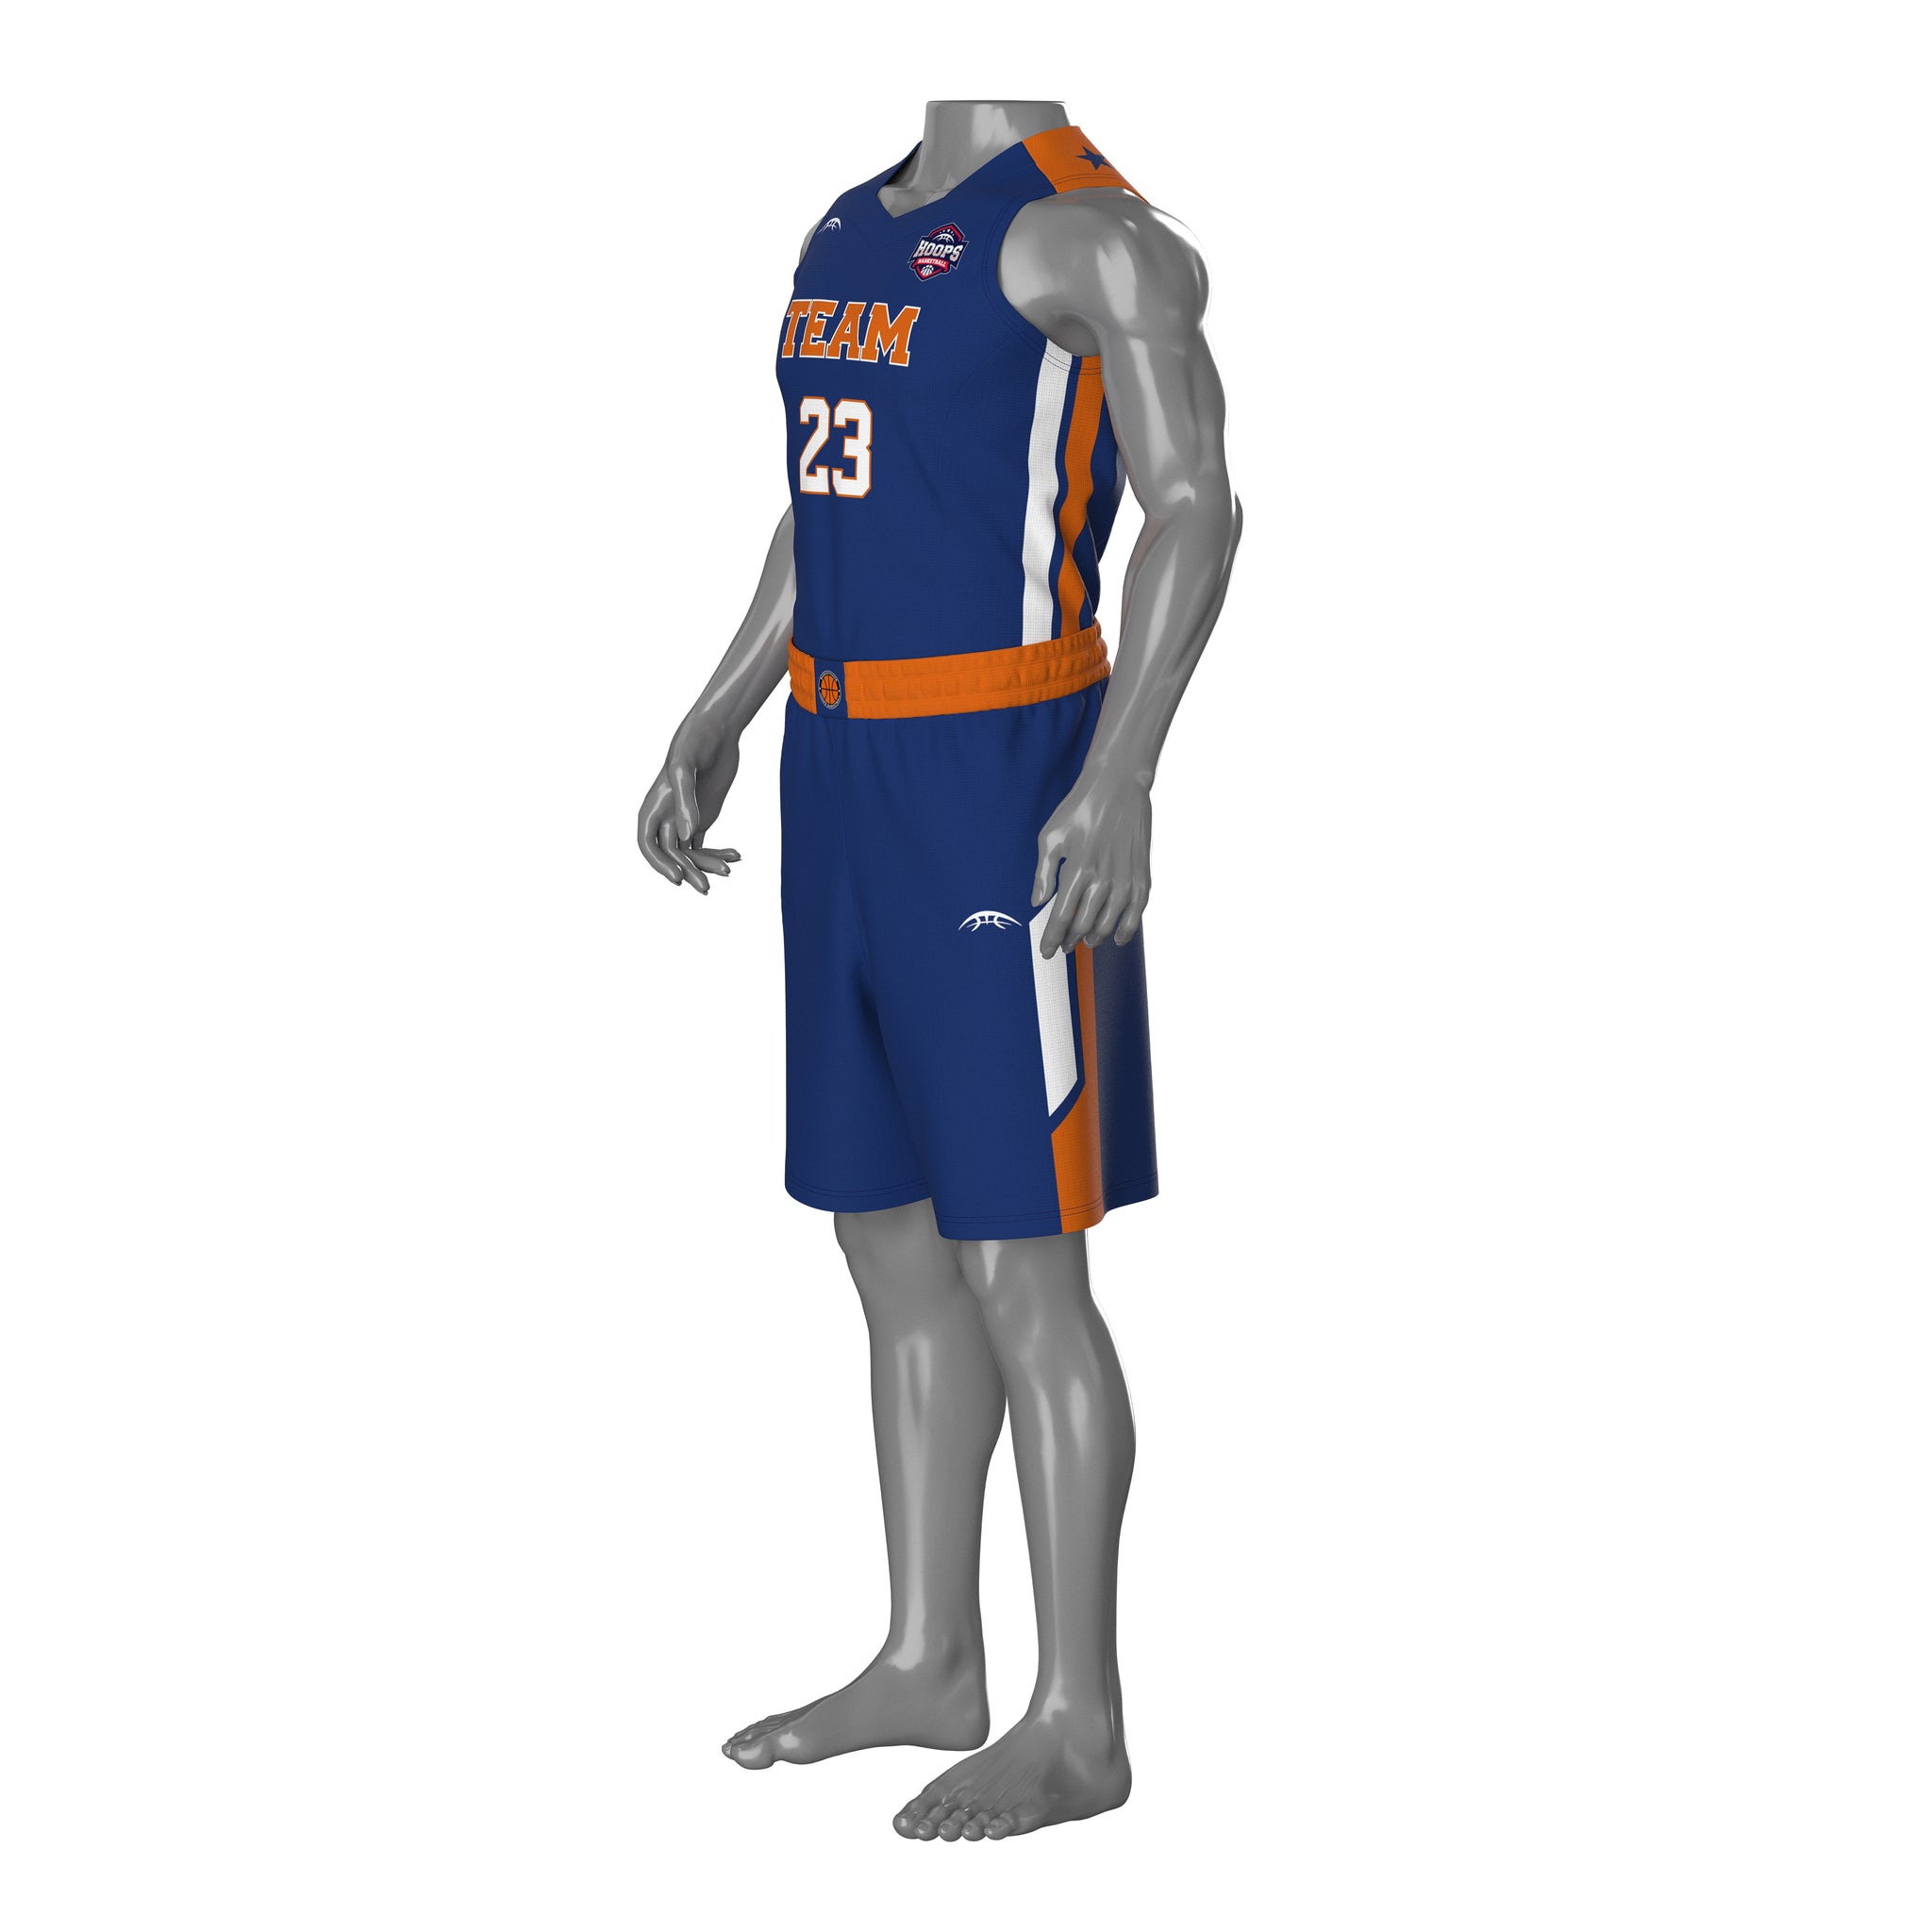 Custom All-Star Basketball Uniform - 159 Falcon